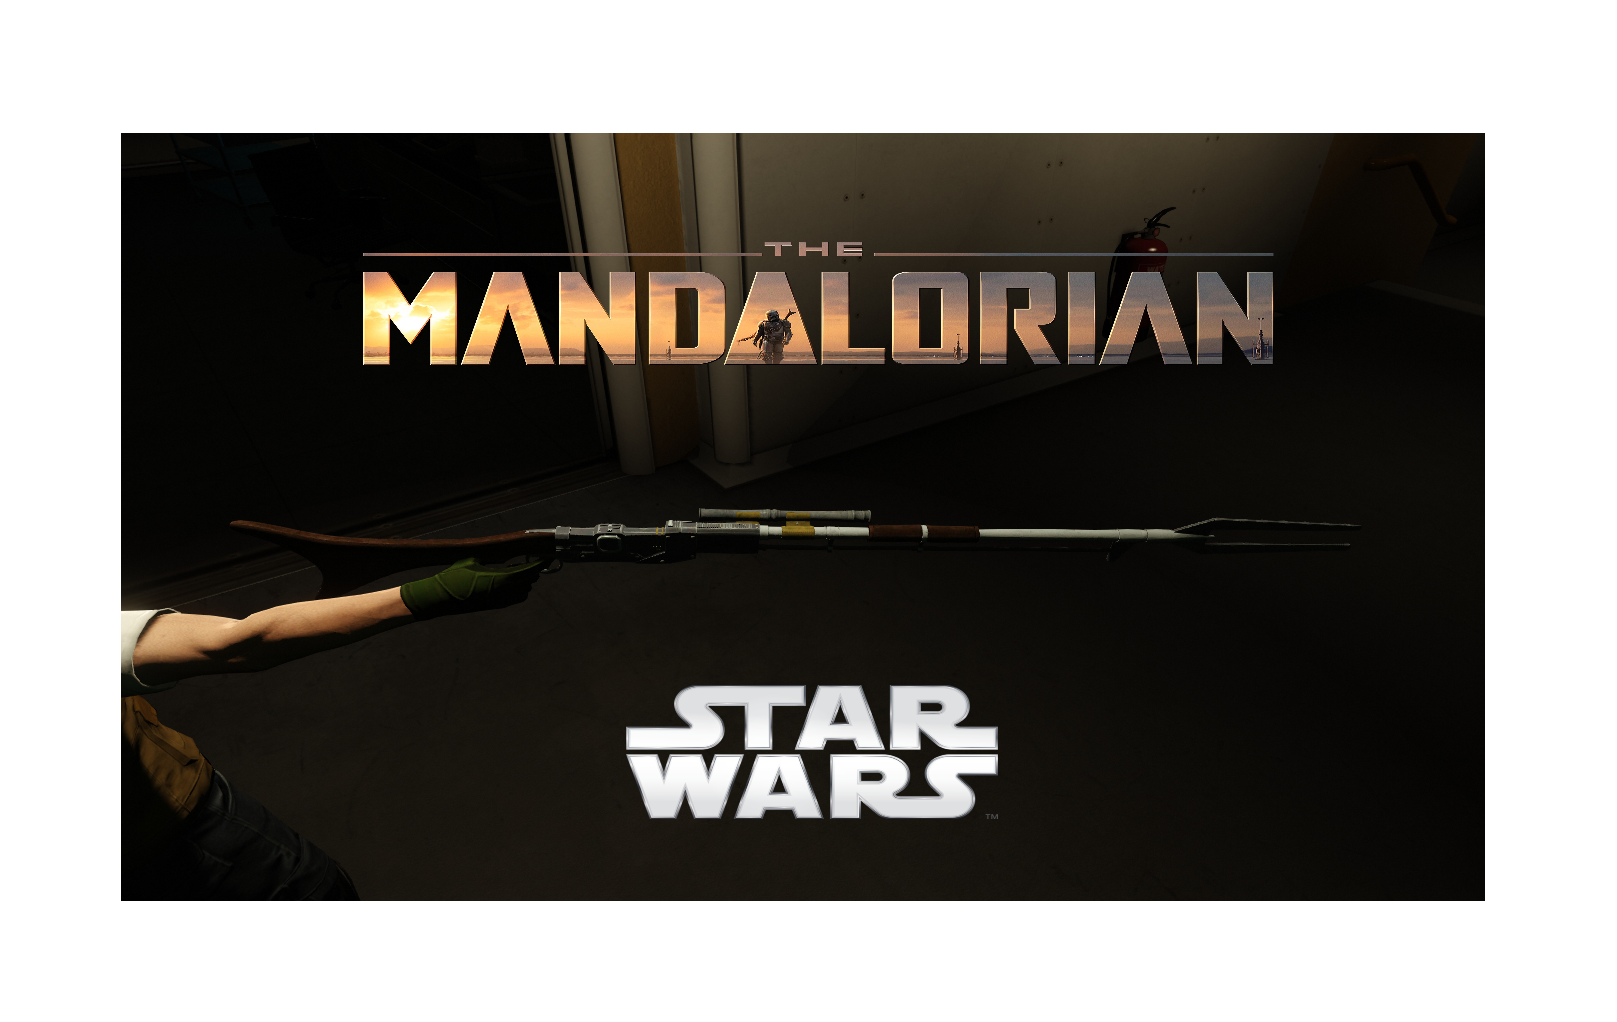 star wars mandalorian weapons